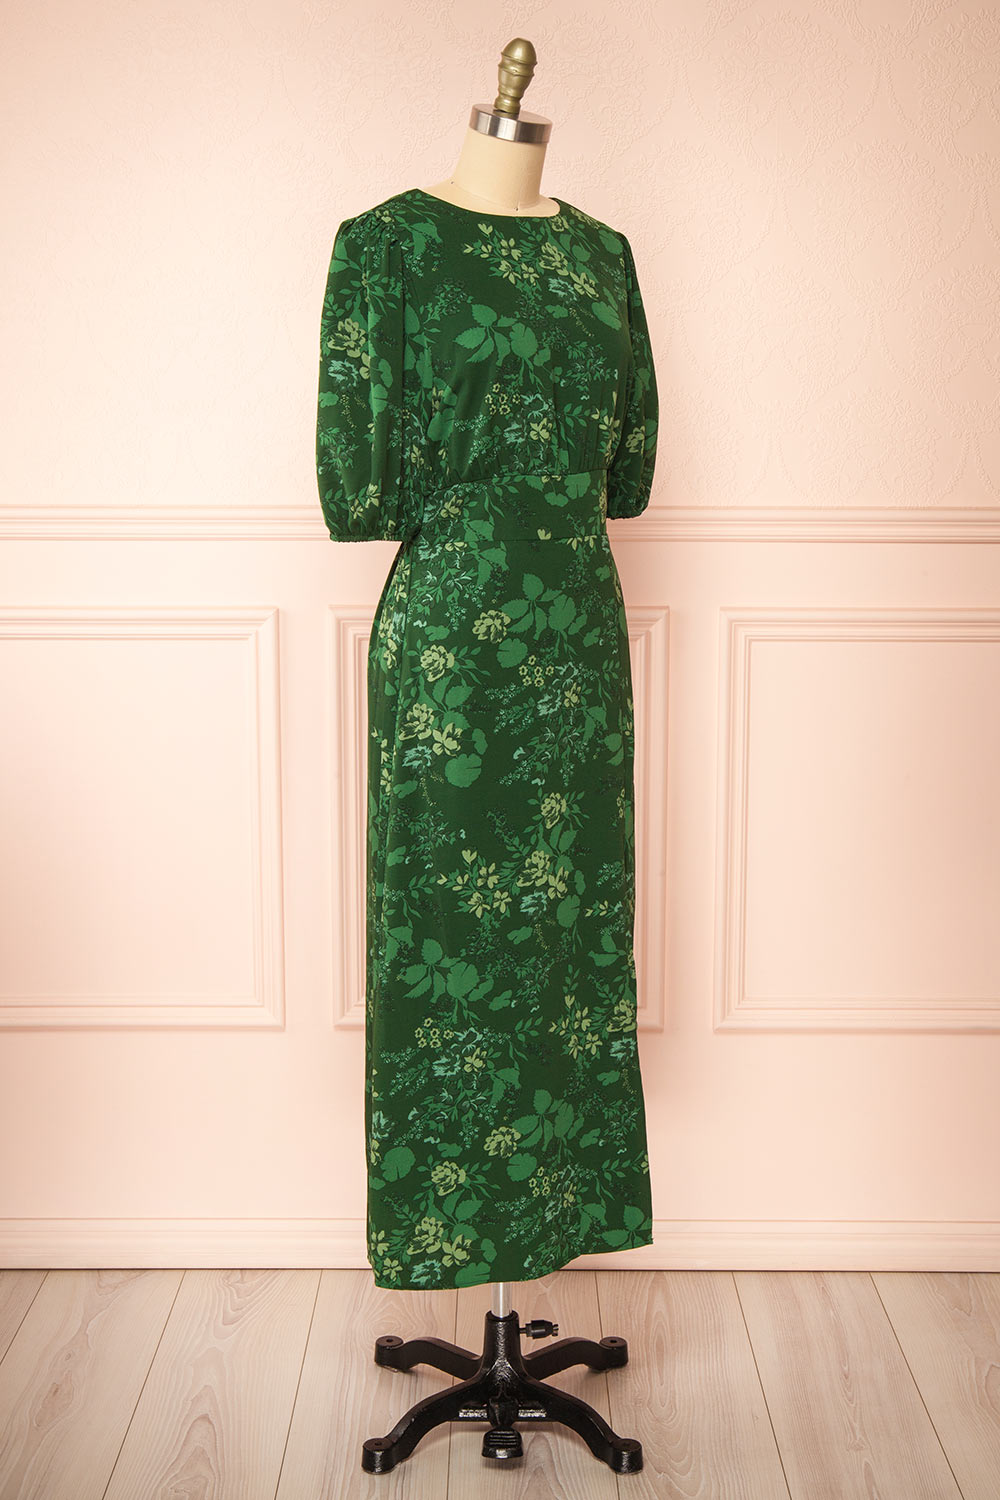 Emirida Long Dark Green Floral Dress | Boutique 1861 side view